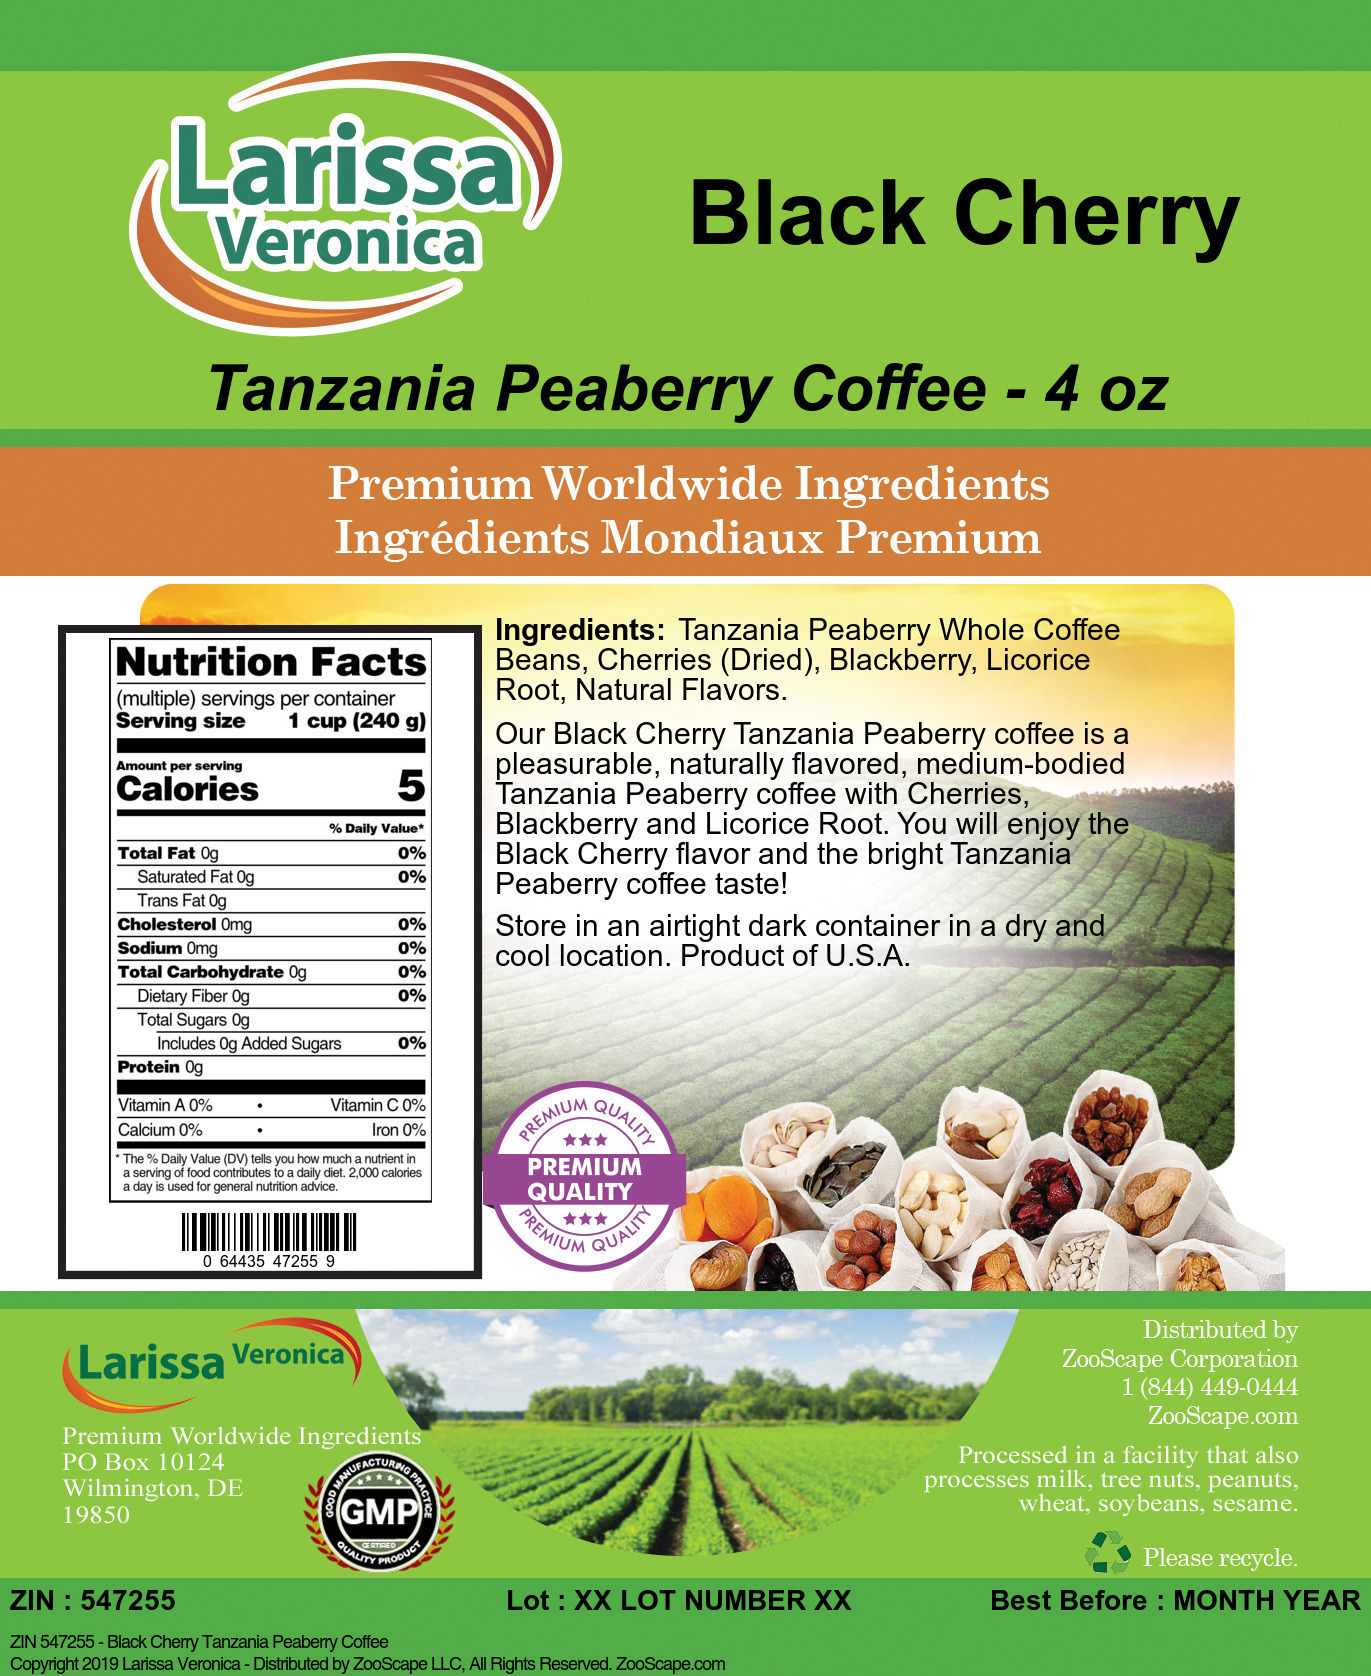 Black Cherry Tanzania Peaberry Coffee - Label